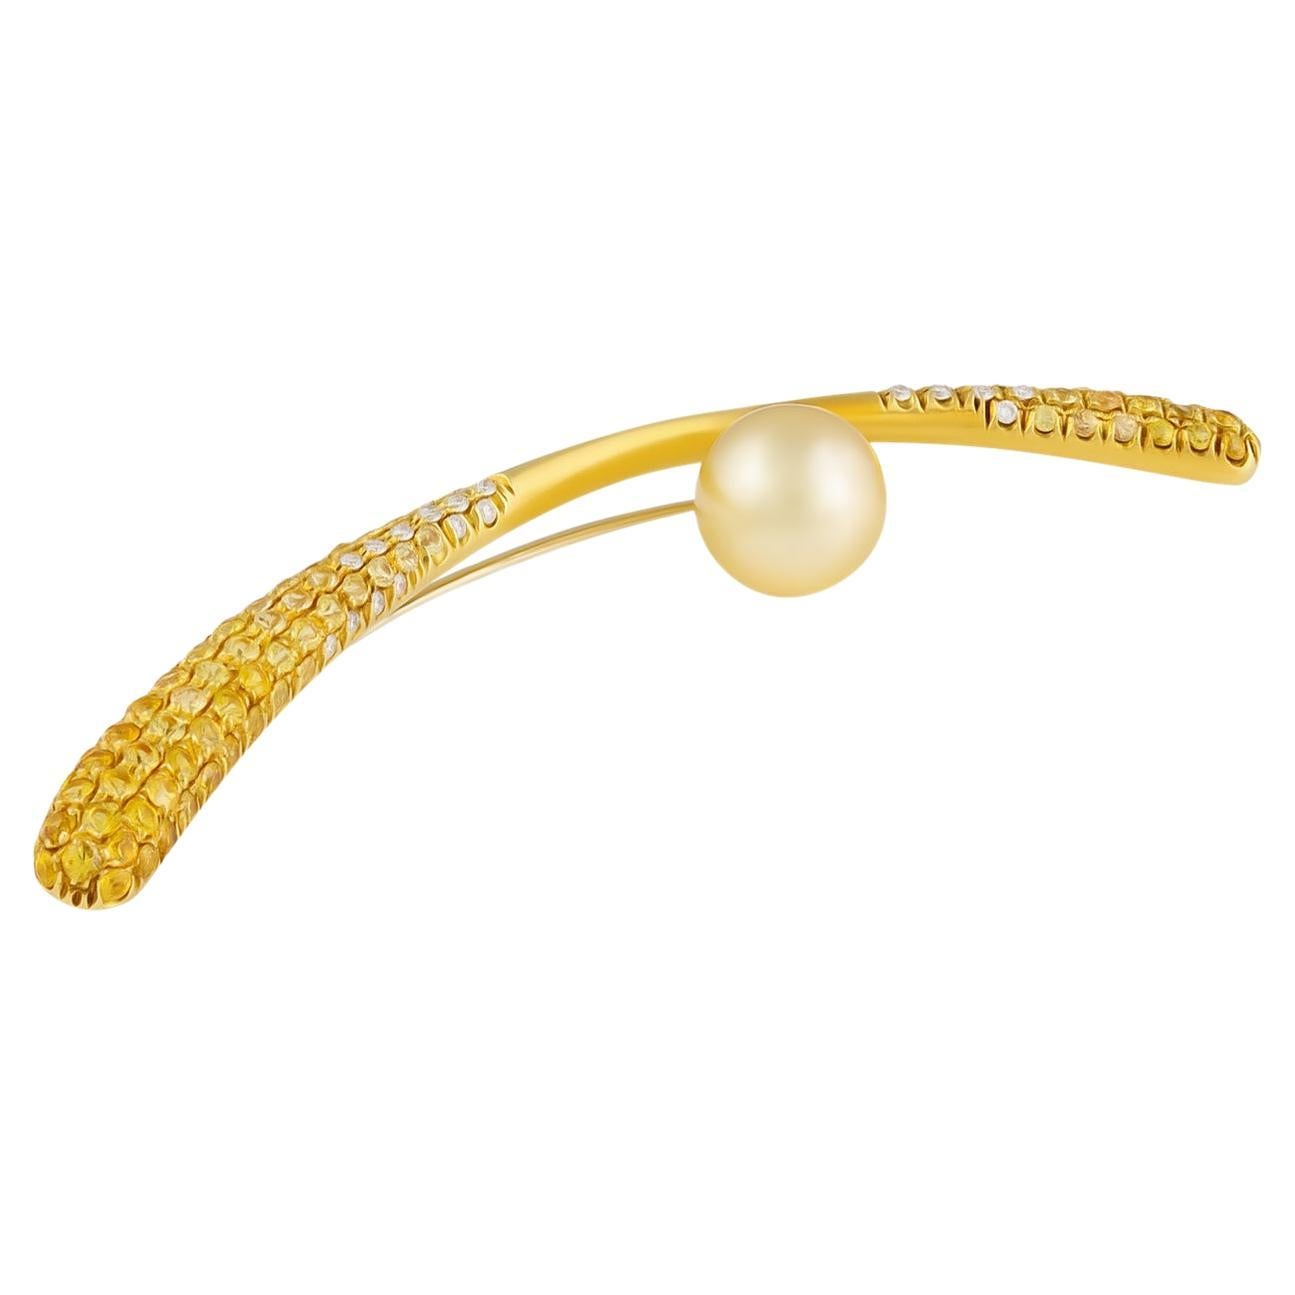 Stefan Hafner Broche en or jaune 18 carats avec diamants, saphirs et perles